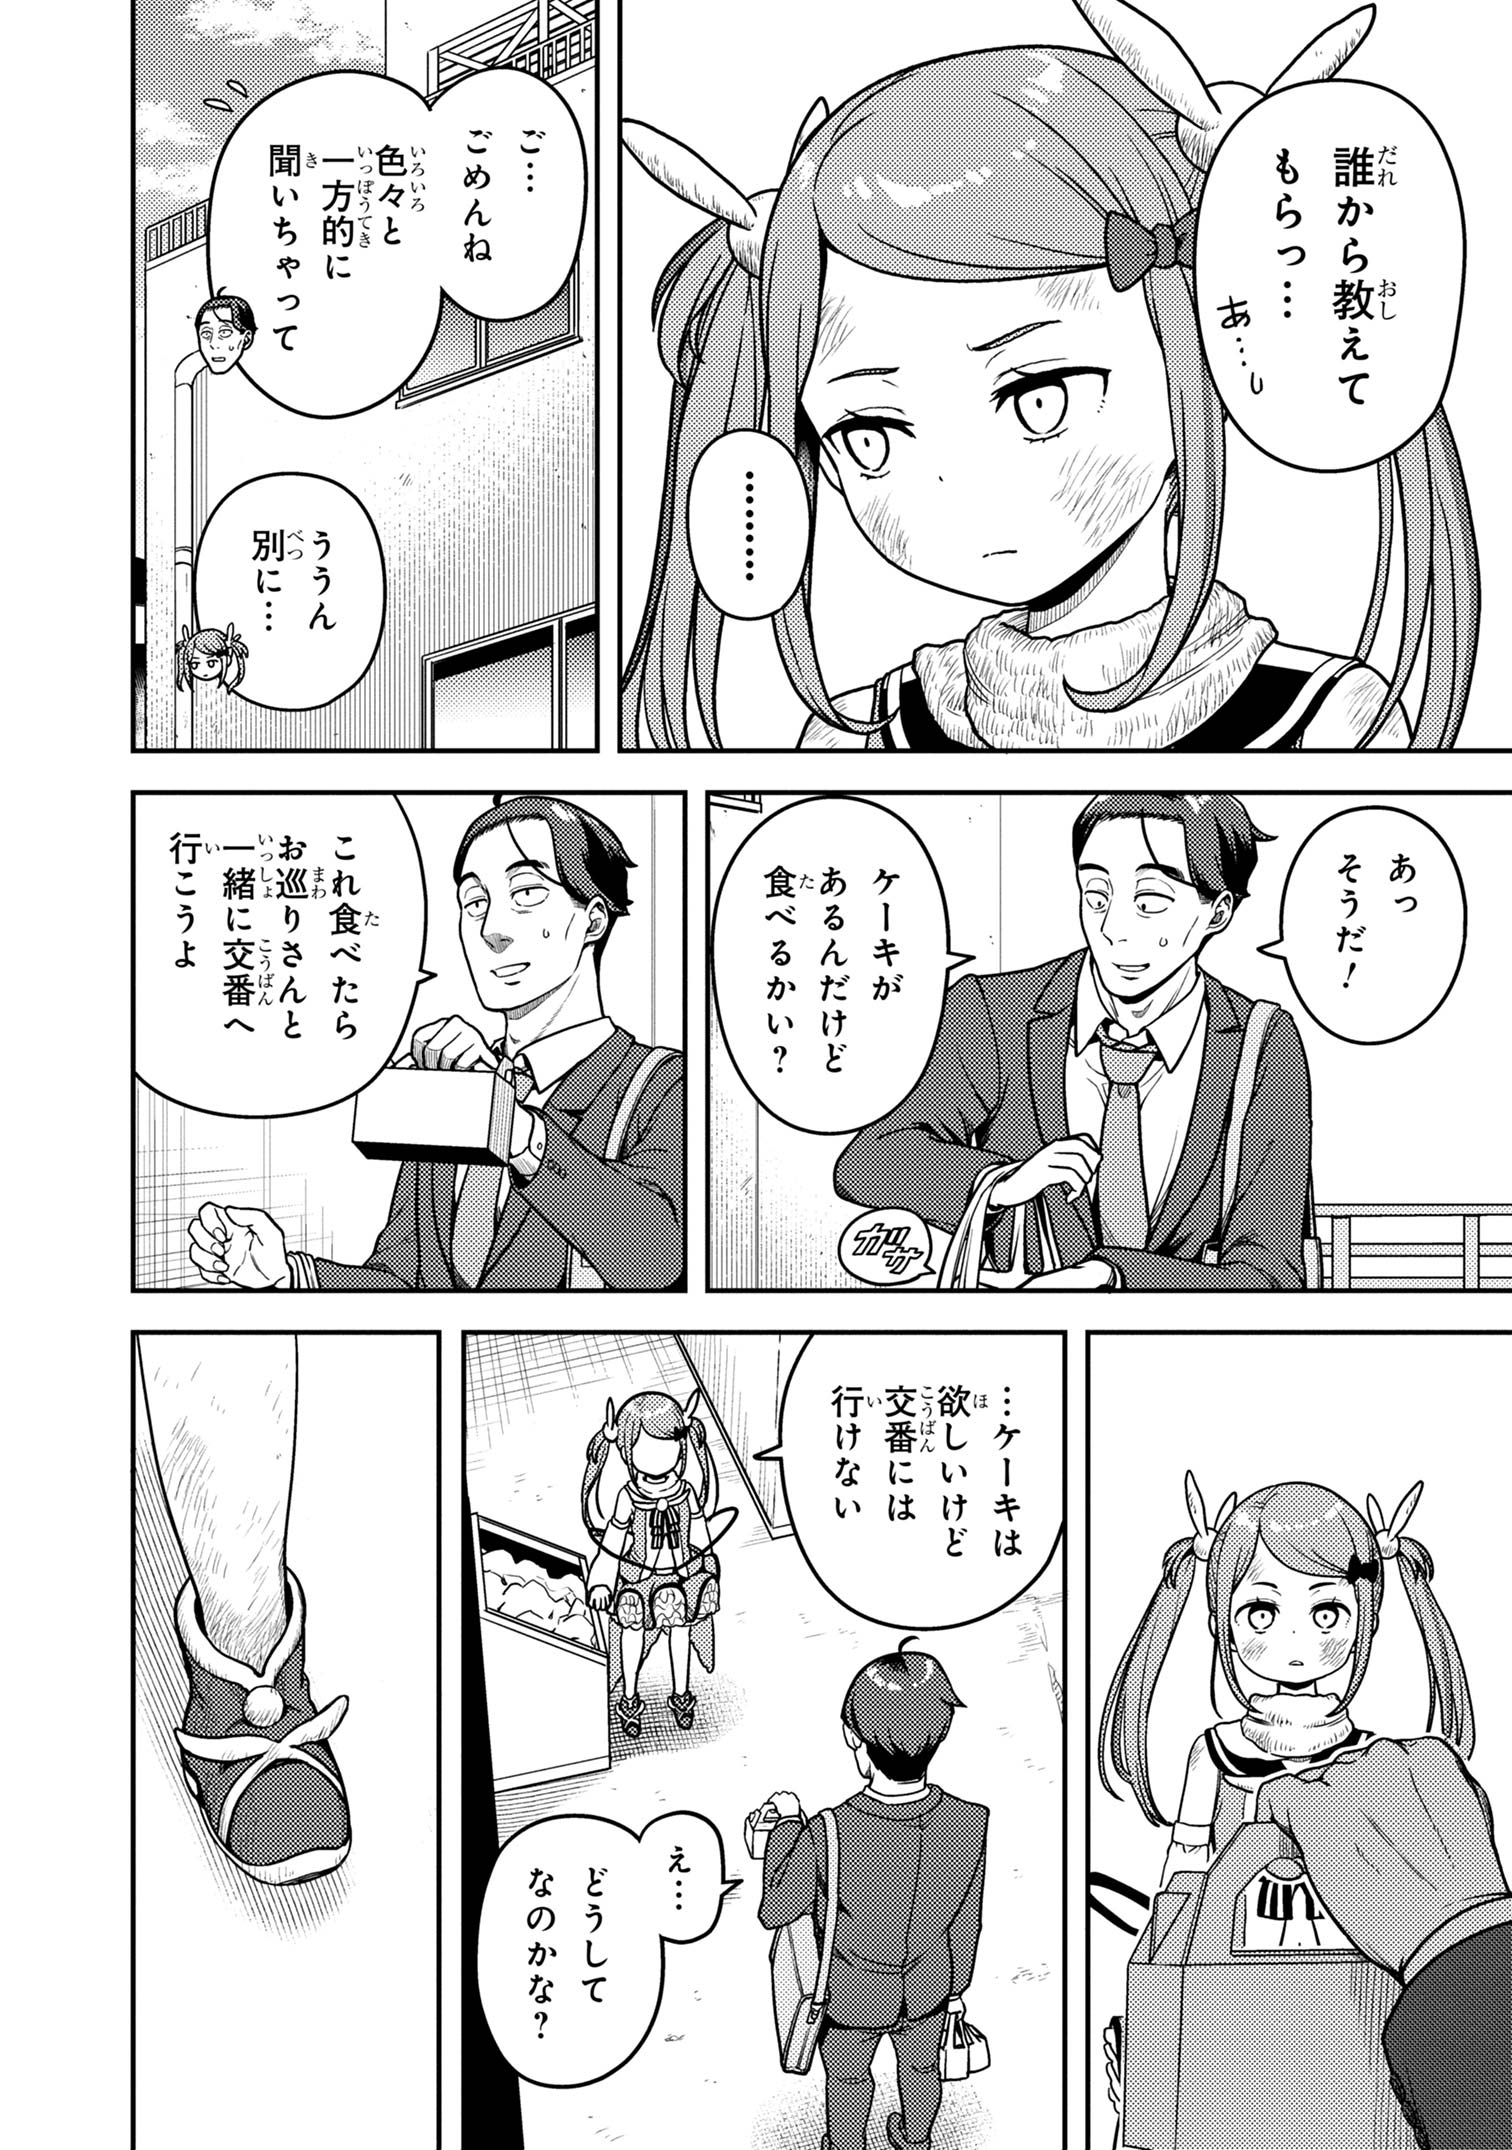 Sasaki to Pii-chan - Chapter 17.2 - Page 3